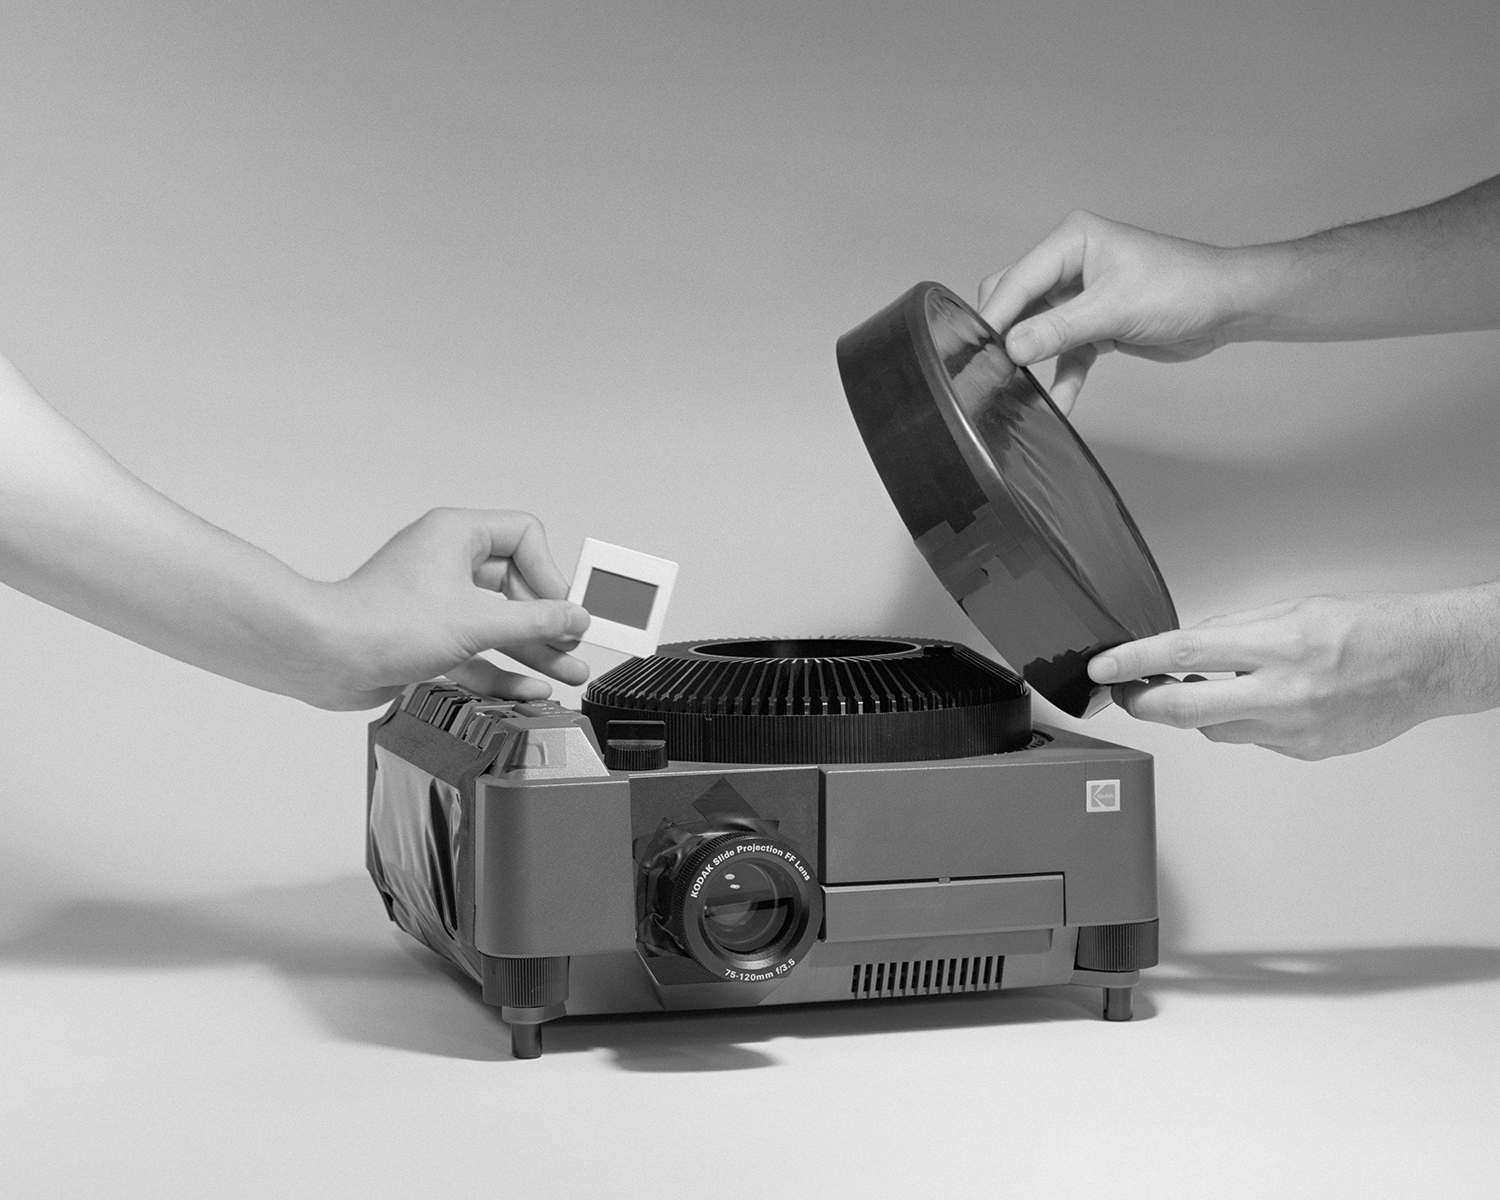 Adaptation of a Slide Projector into a Camera